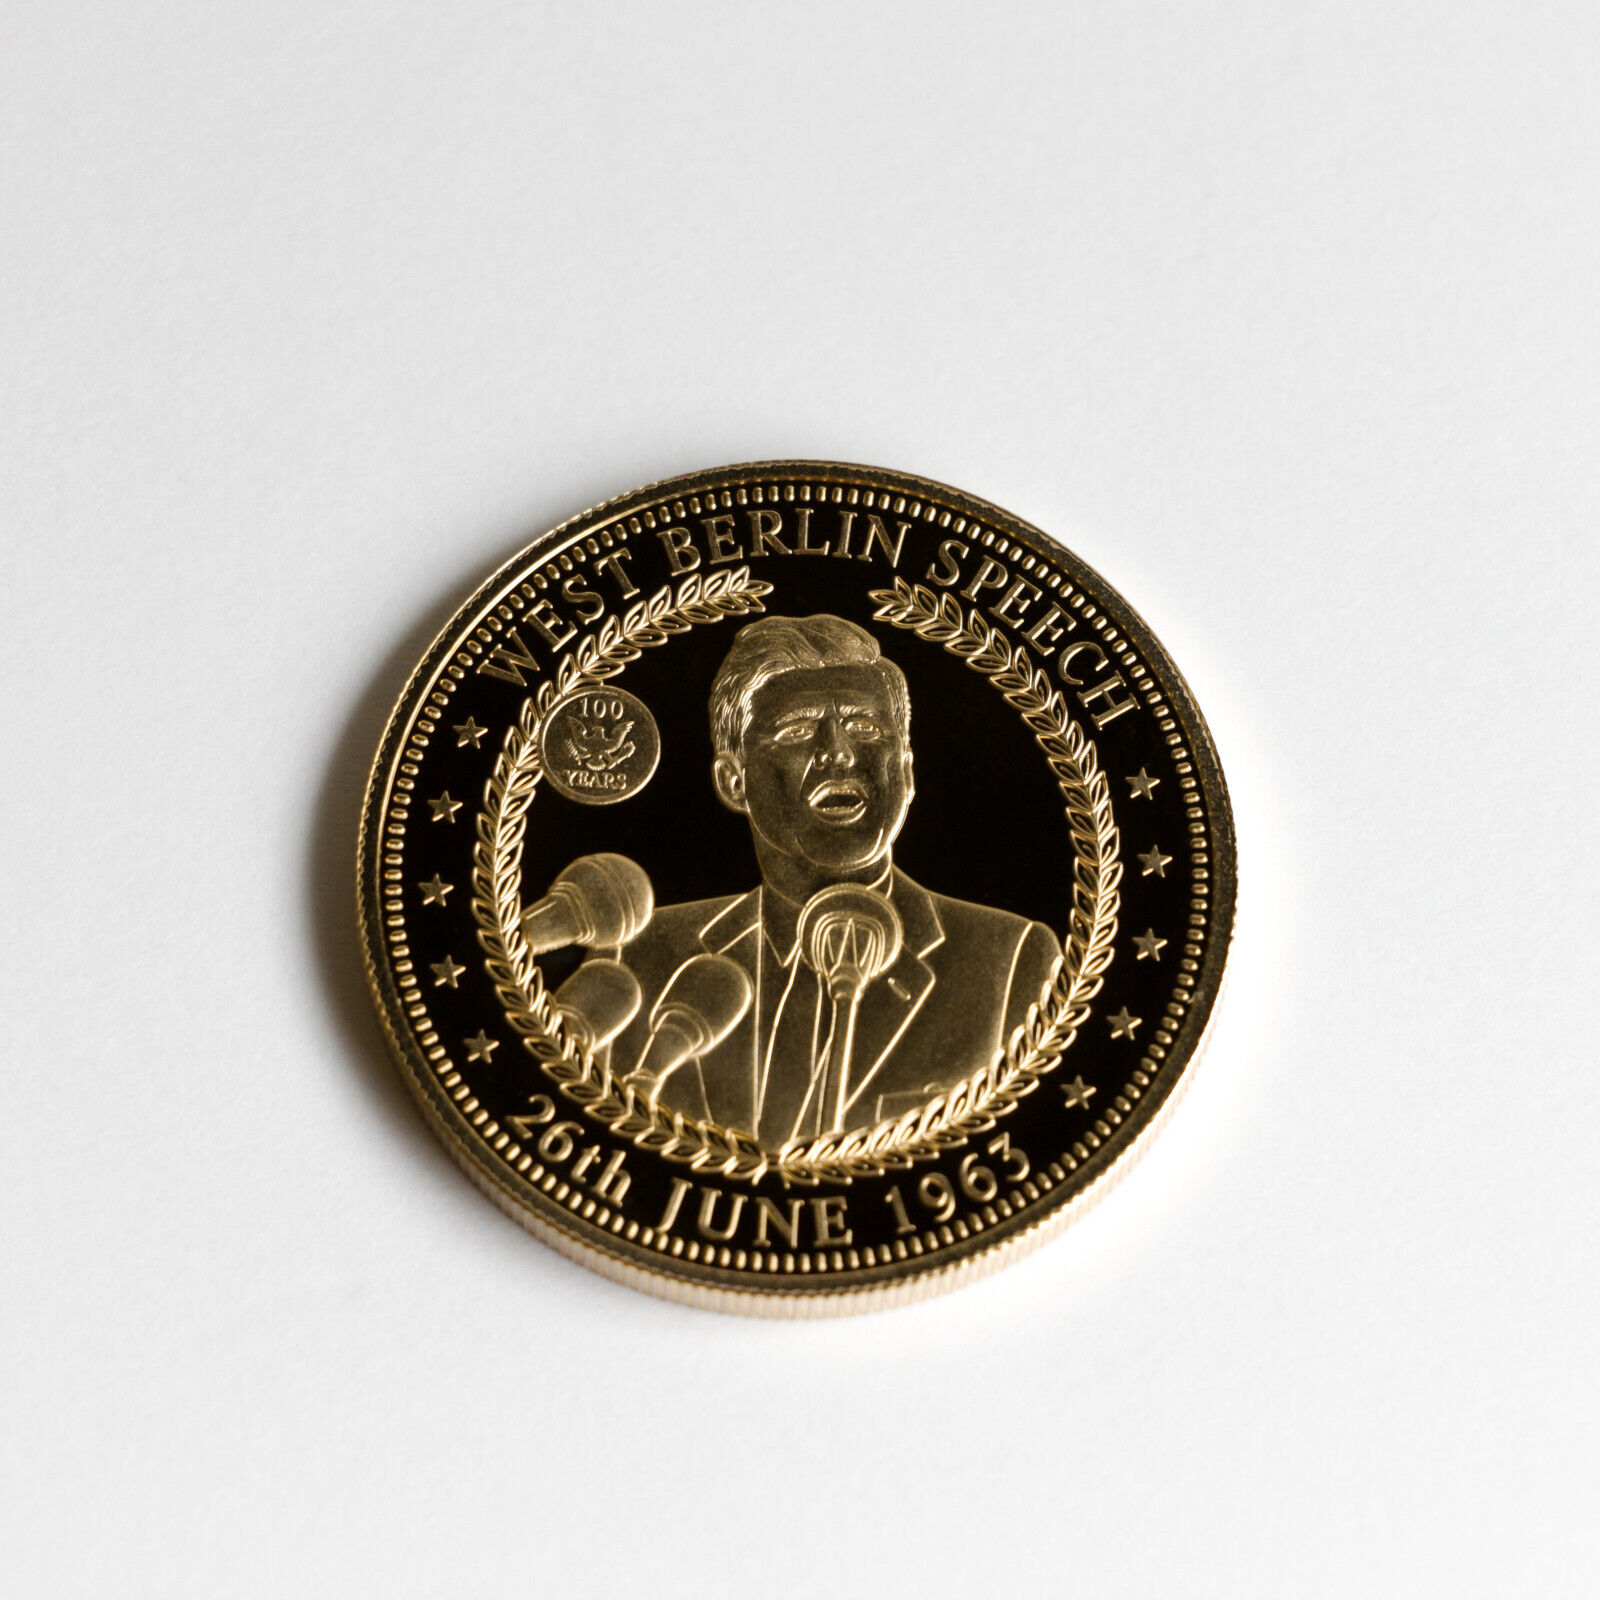 John F Kennedy 100th Anniversary Proof Coin West Berlin Speech